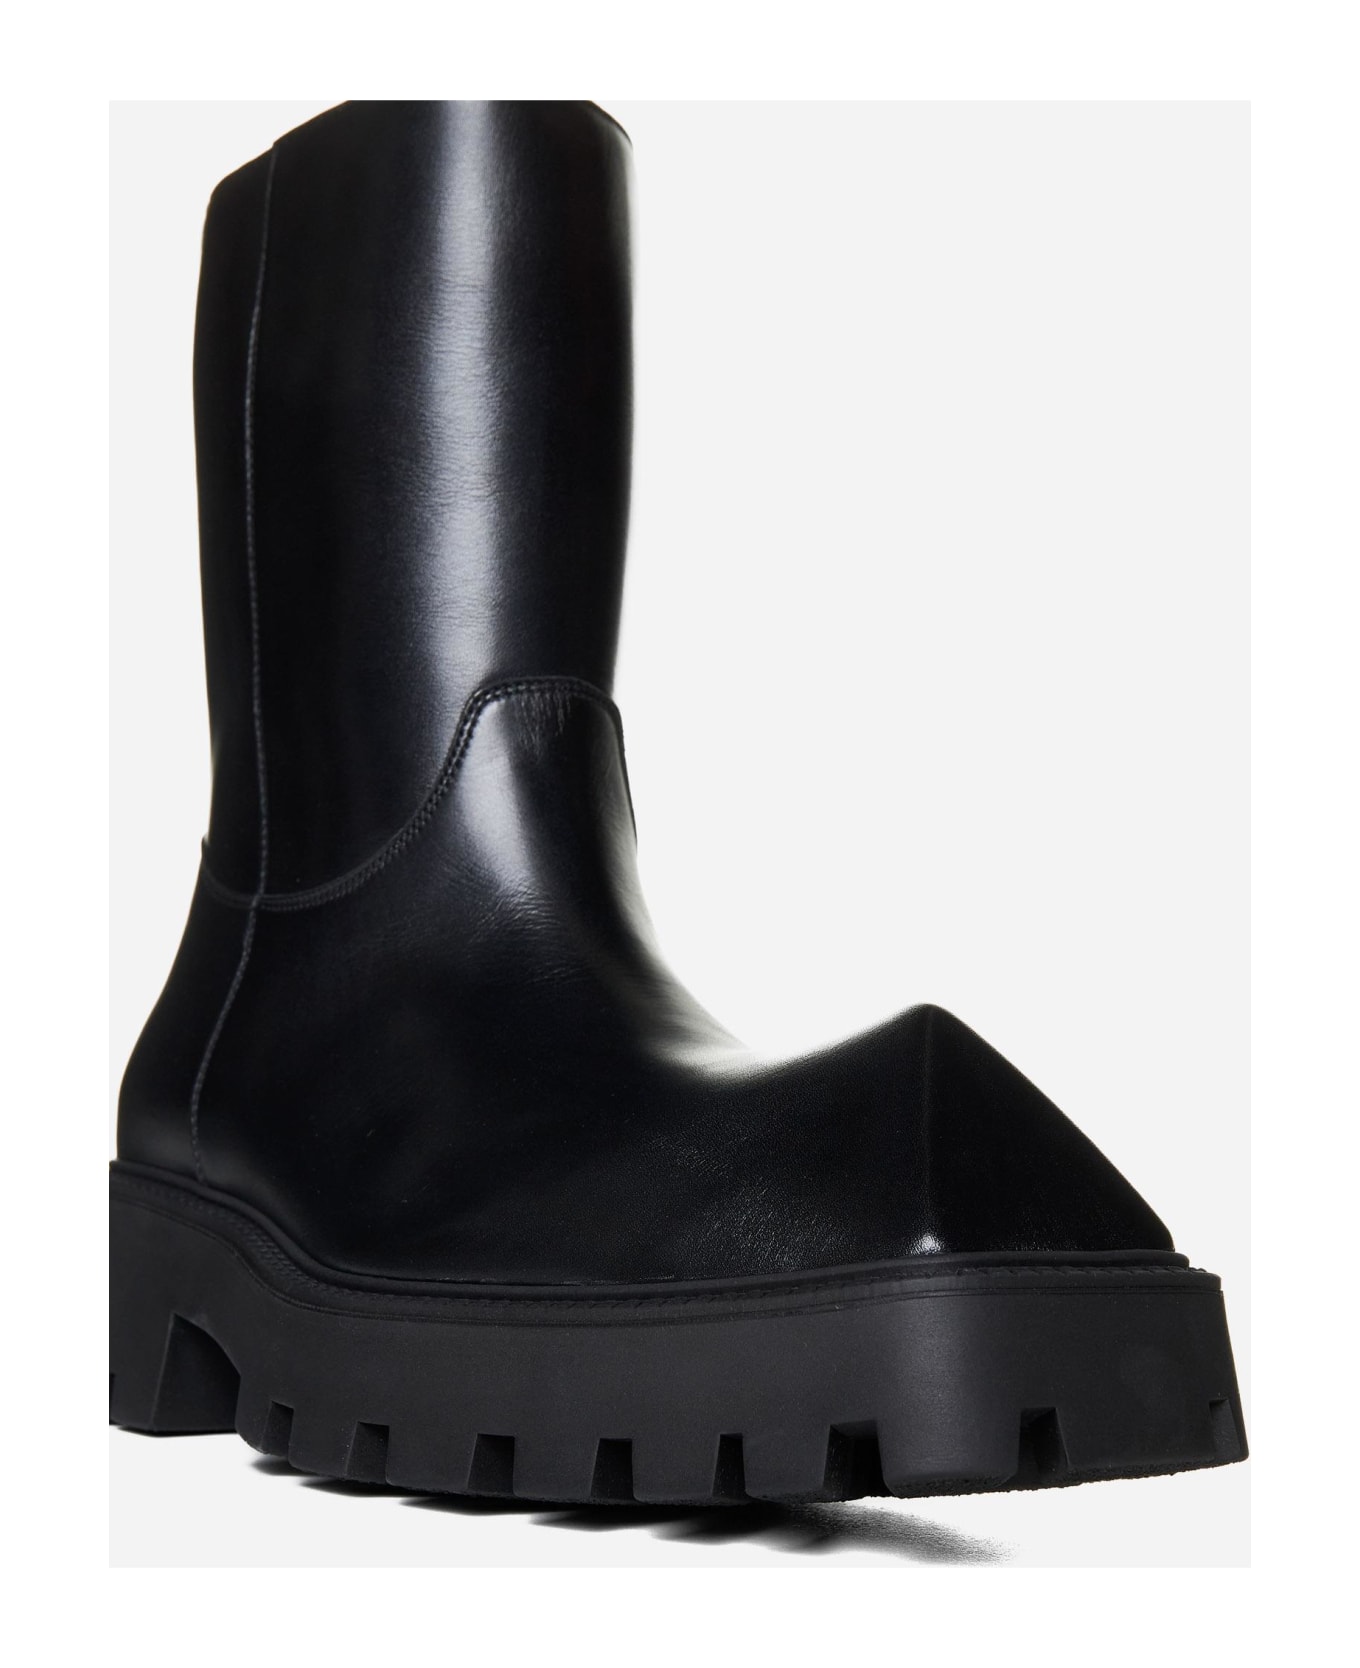 Balenciaga Rhino Leather Ankle Boots - Black ブーツ